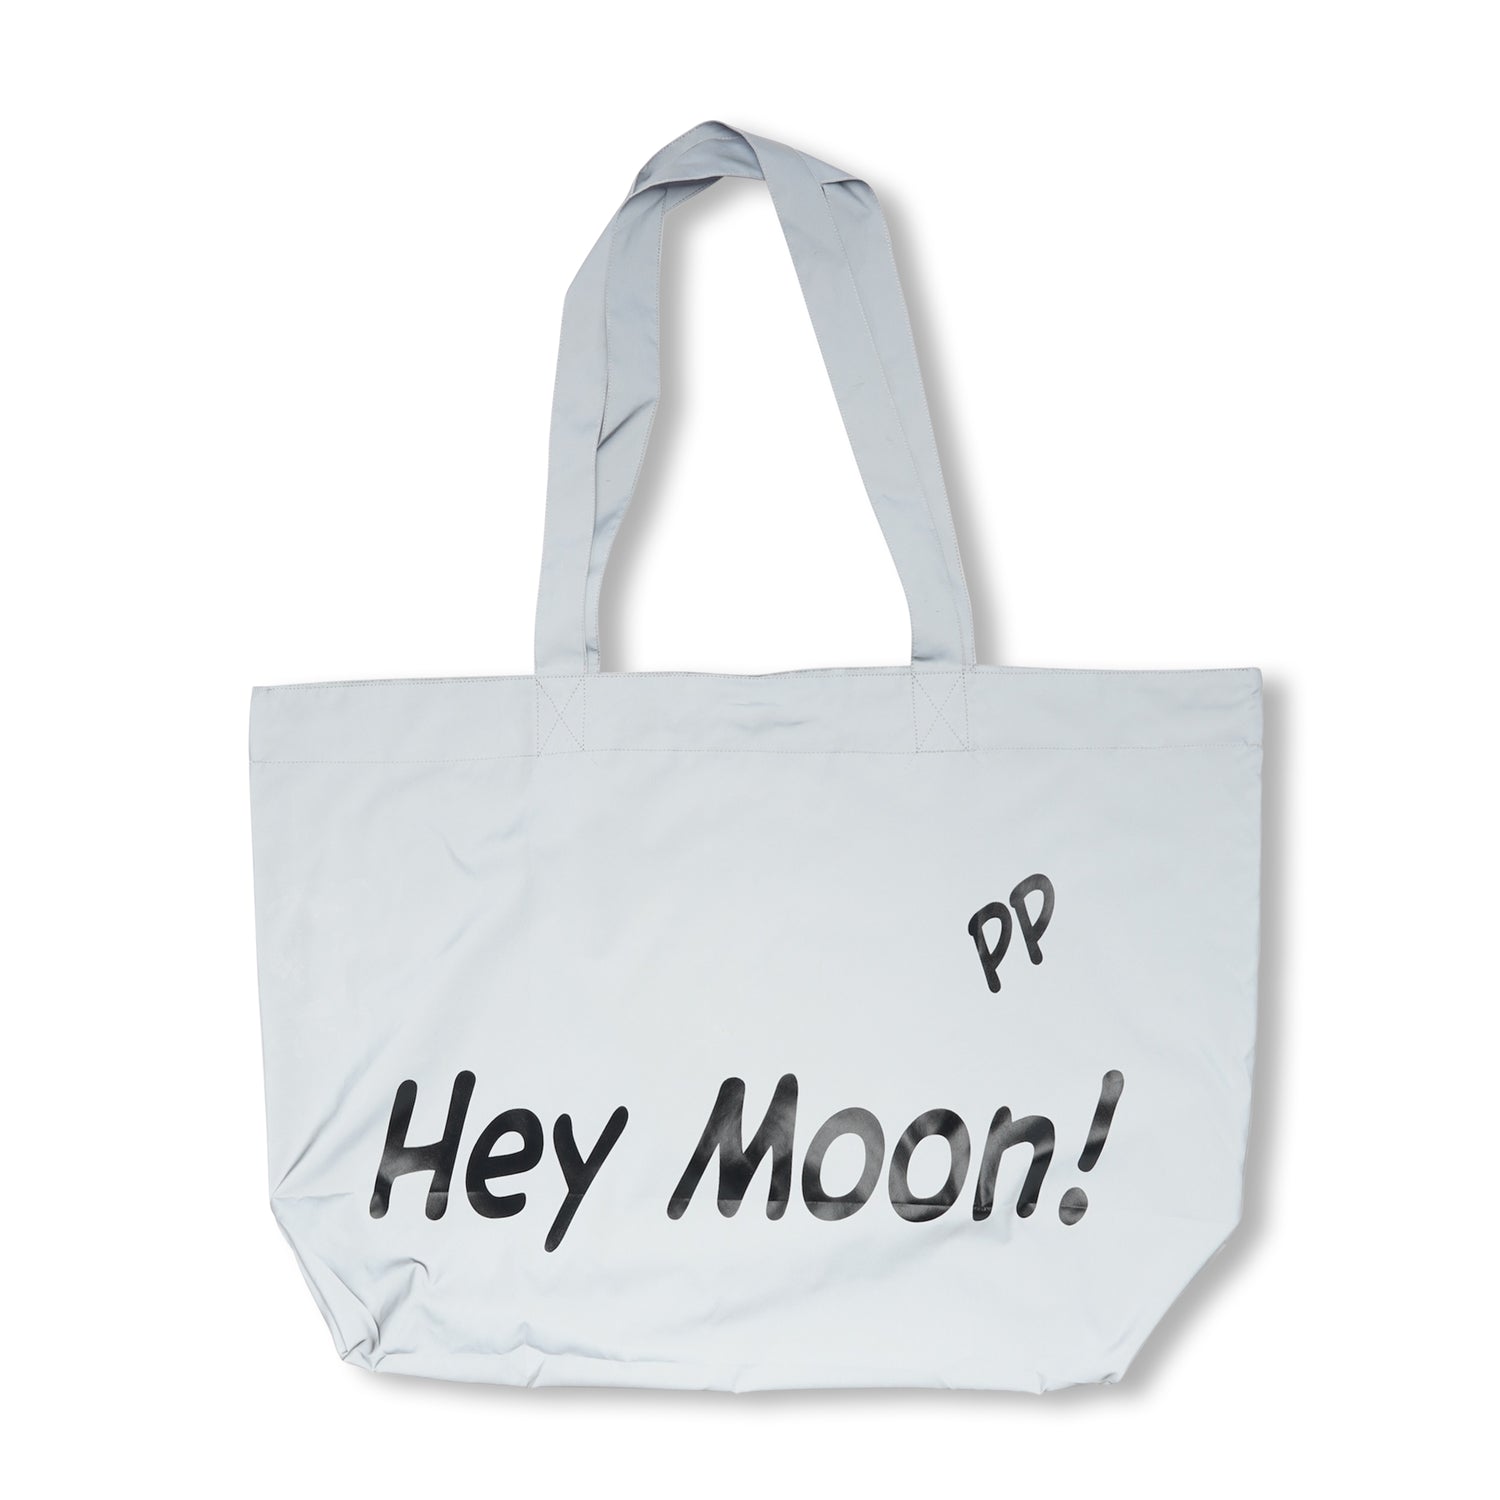 Hey Moon! Tote Bag, Reflector Spezial